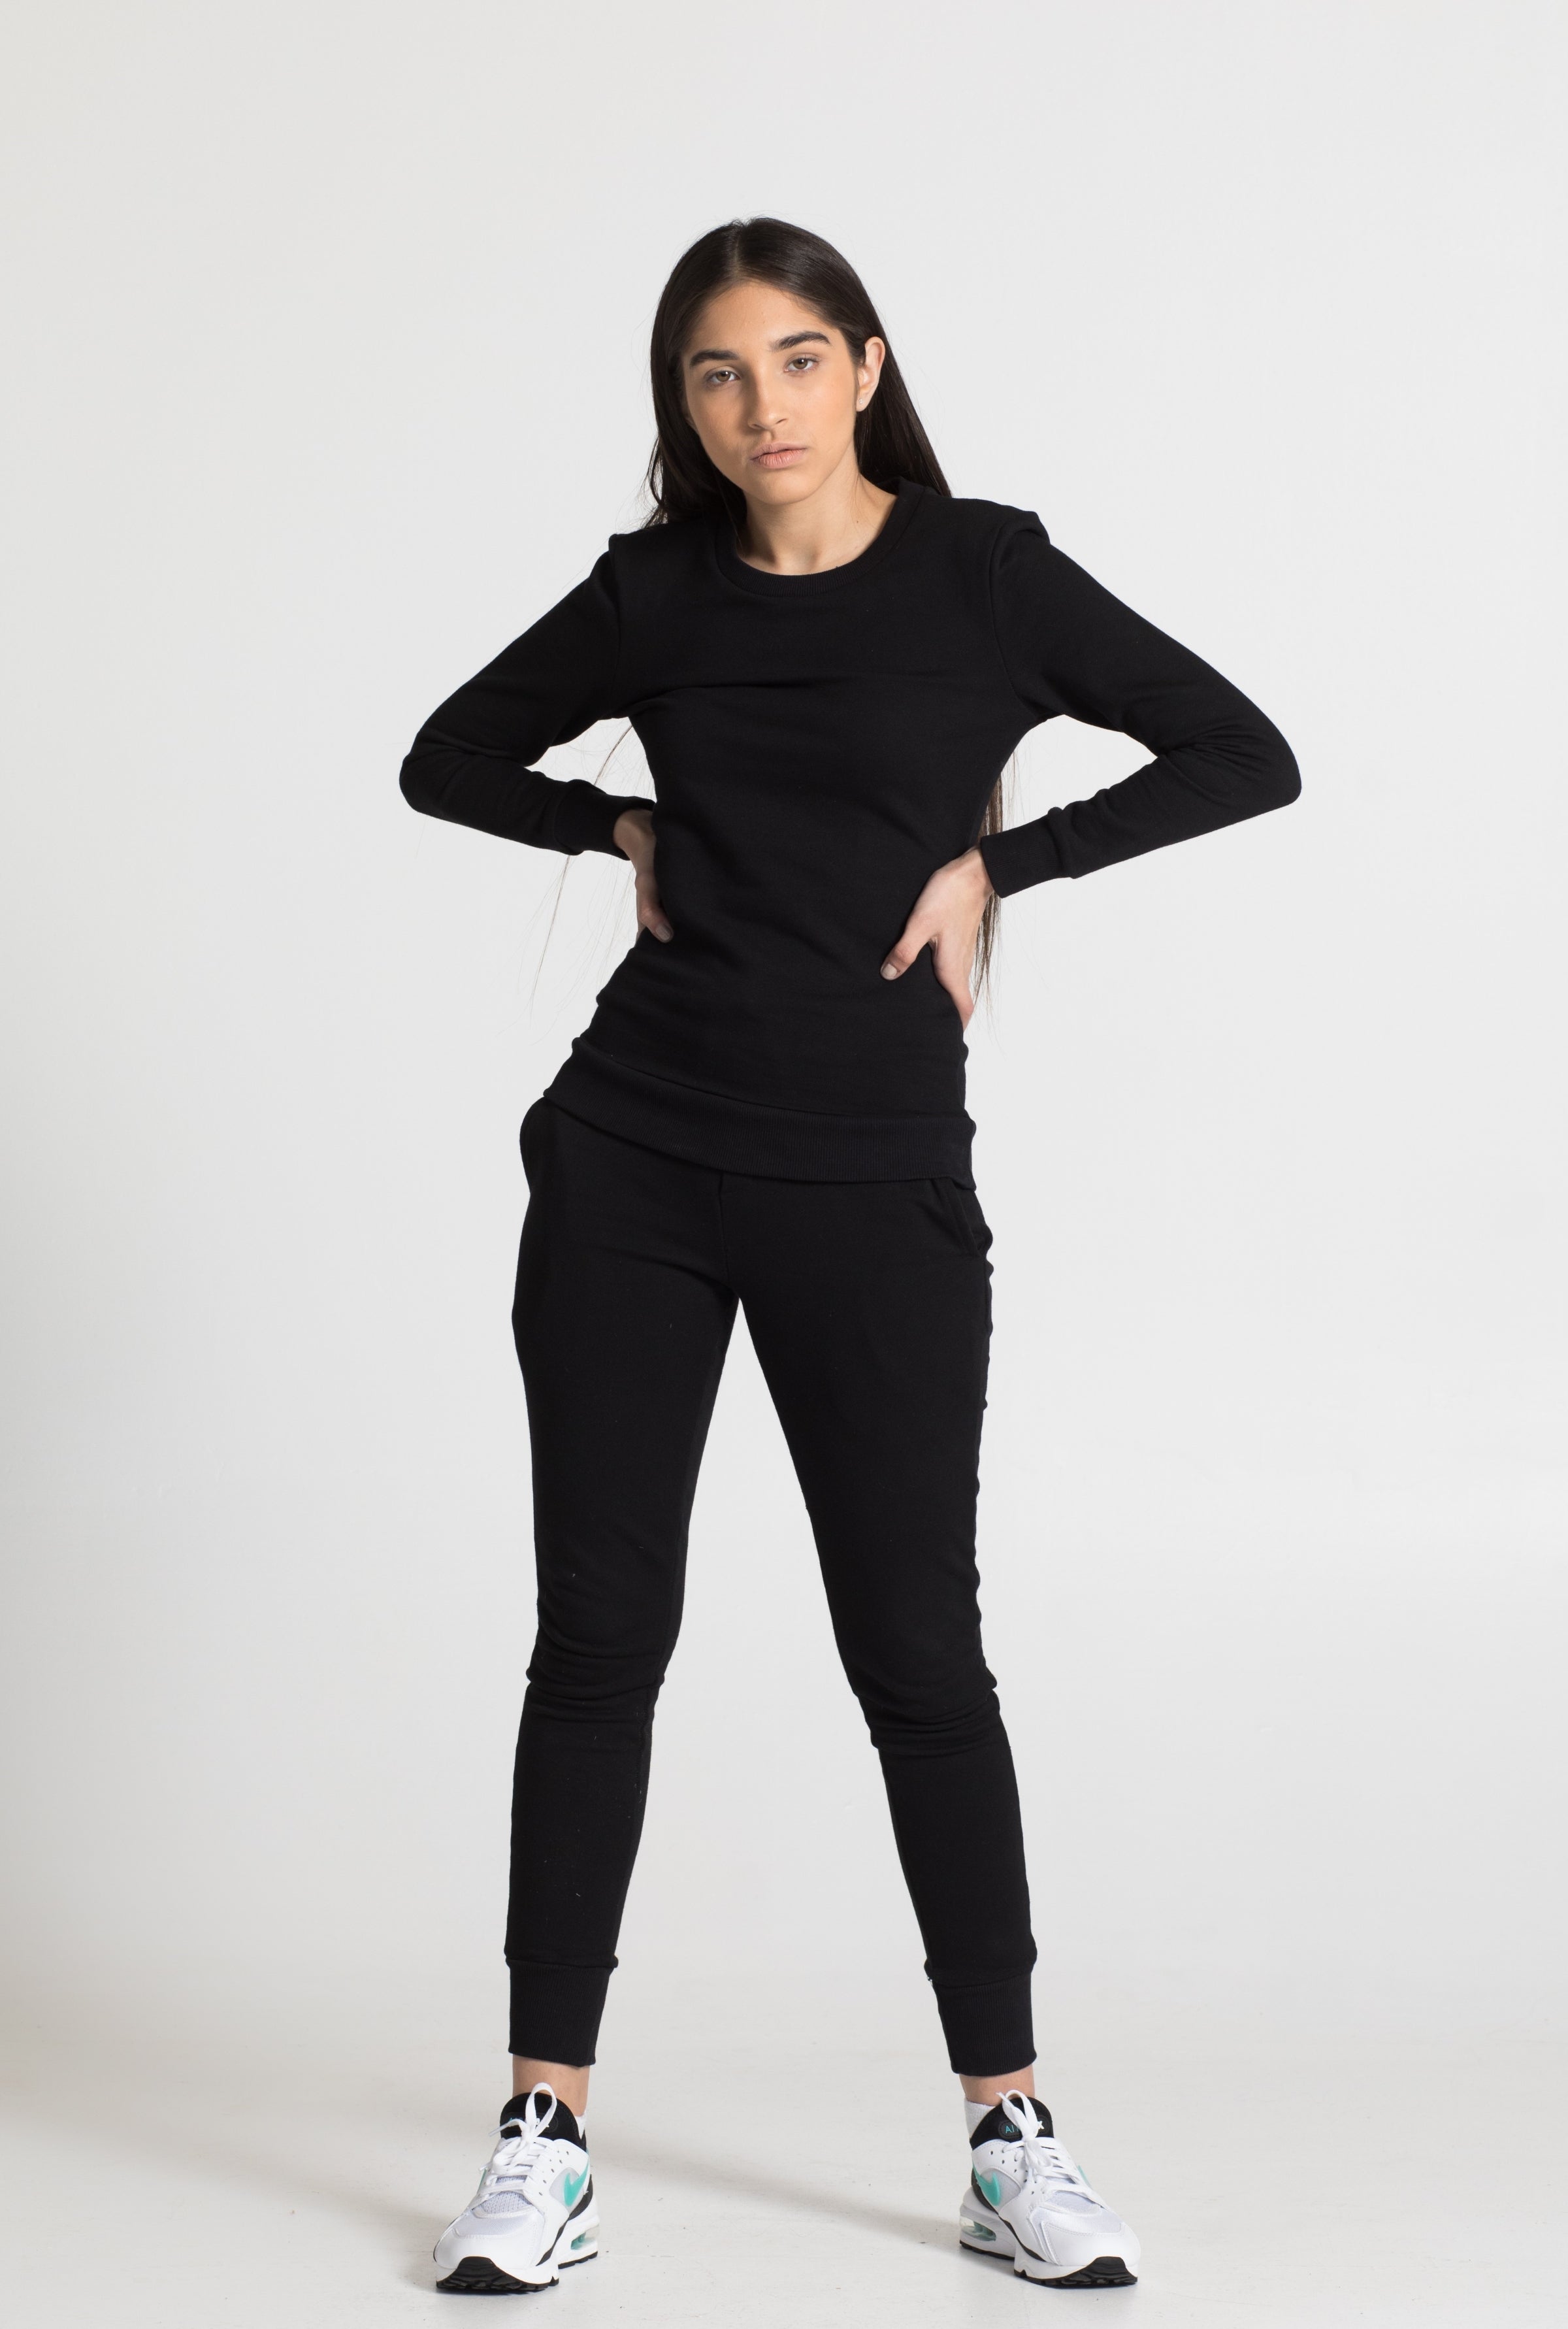 Black Label Society LOVE Women's Sweatpants, Apparel